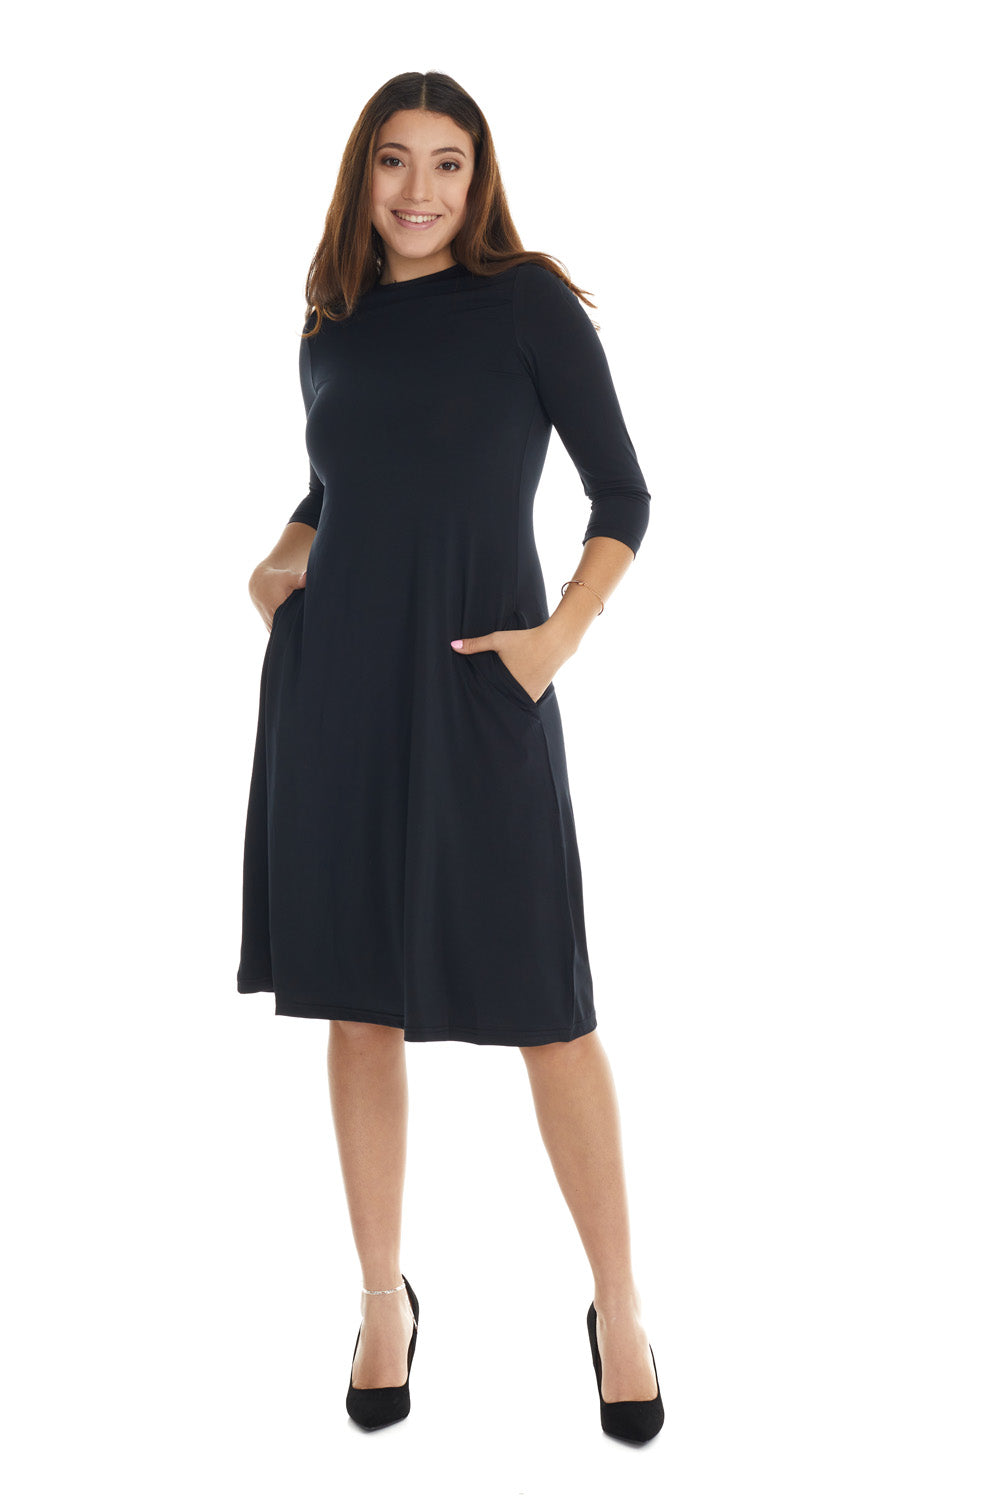 Black flary below knee length 3/4 sleeve crew neck modest tznius a-line dress with pockets